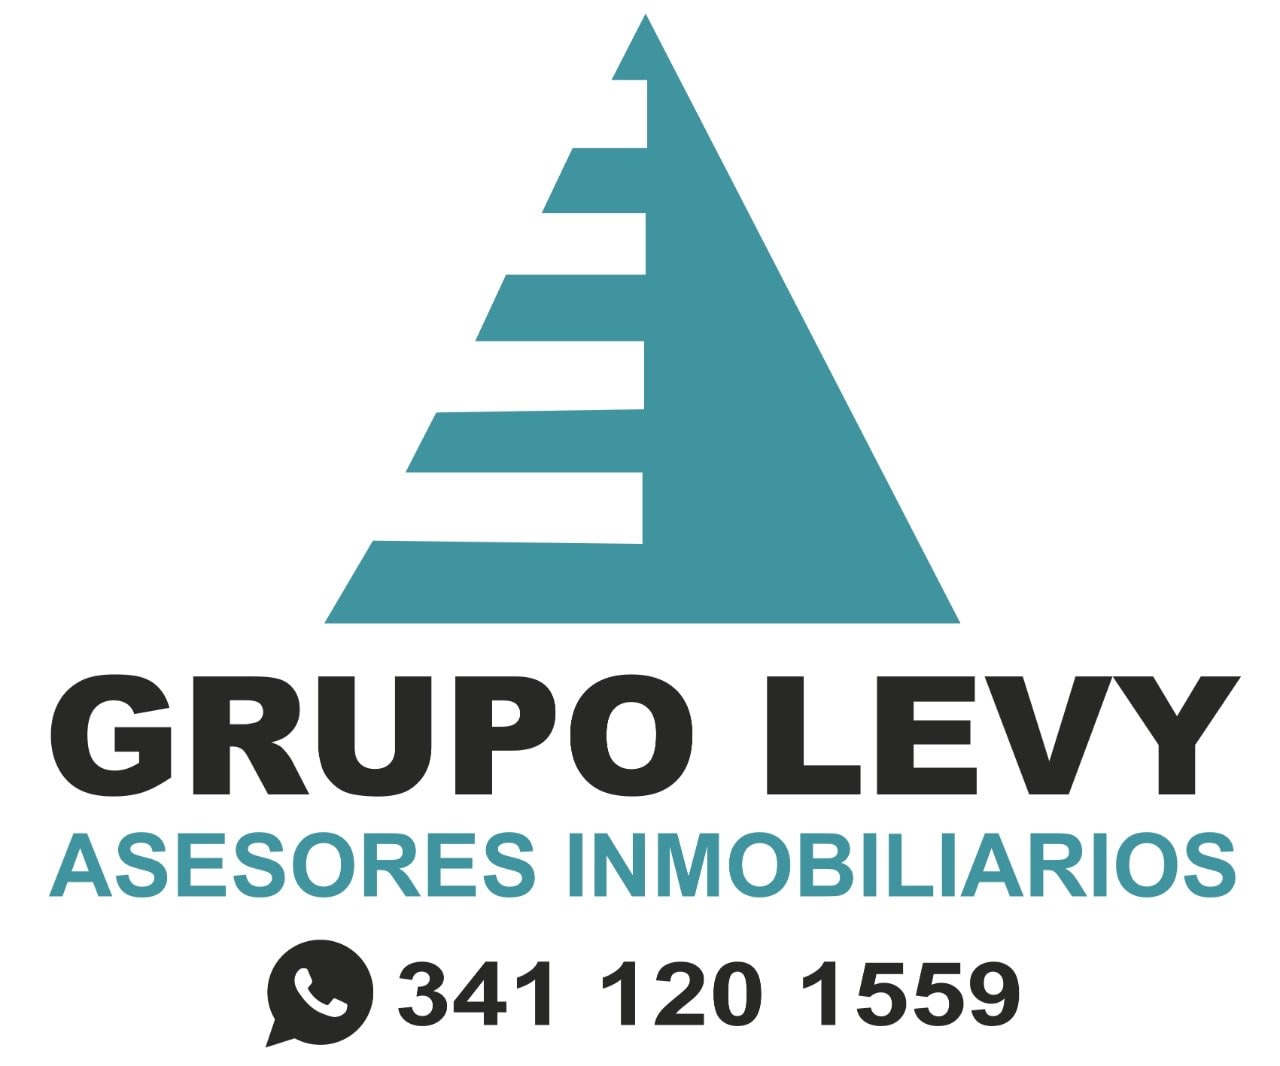 Grupo Levy